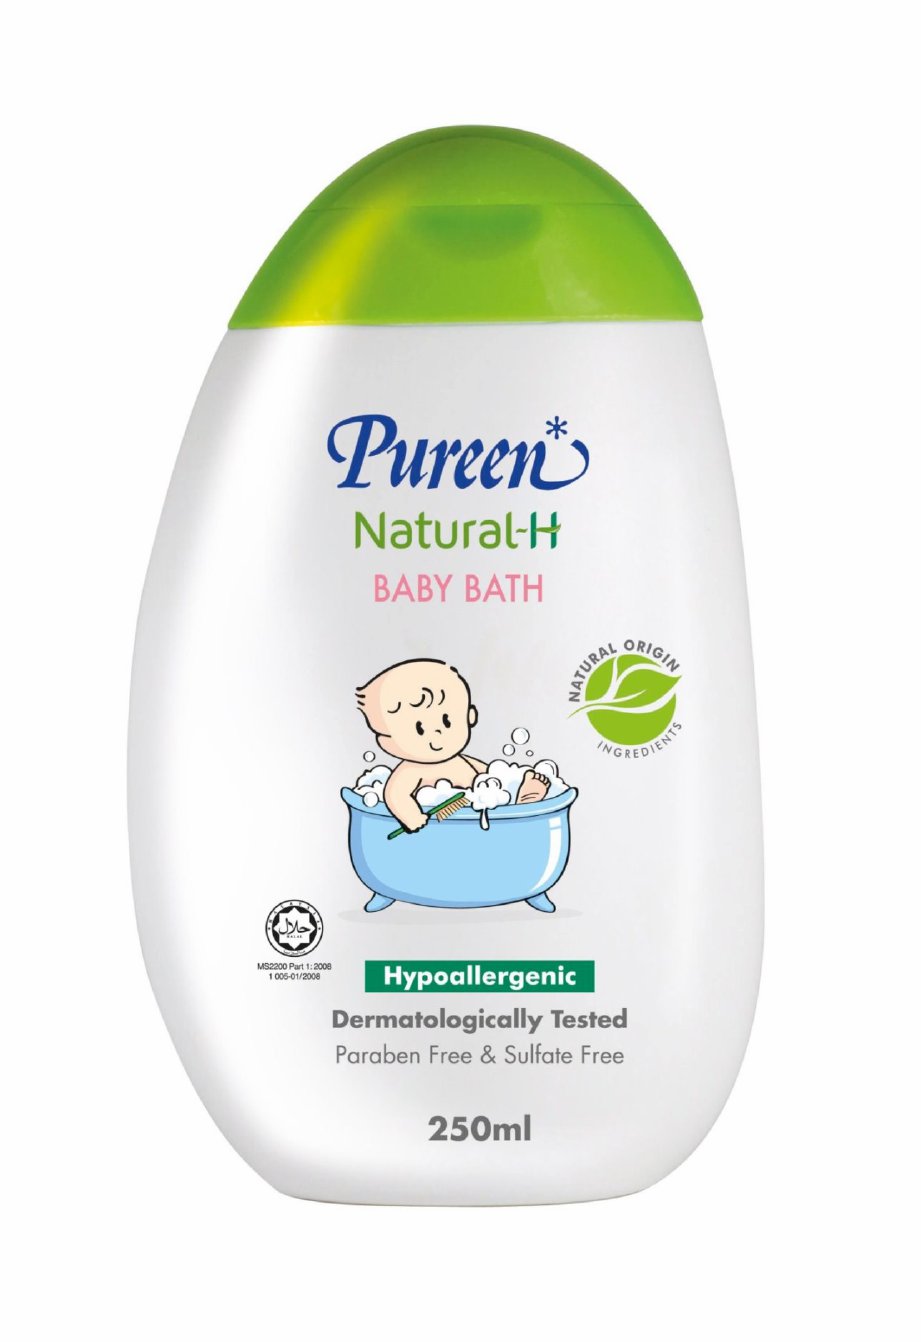 PRODUK Pureen Natural-H mandian bayi yang dirumus dengan bahan berasaskan sumber semula jadi. 